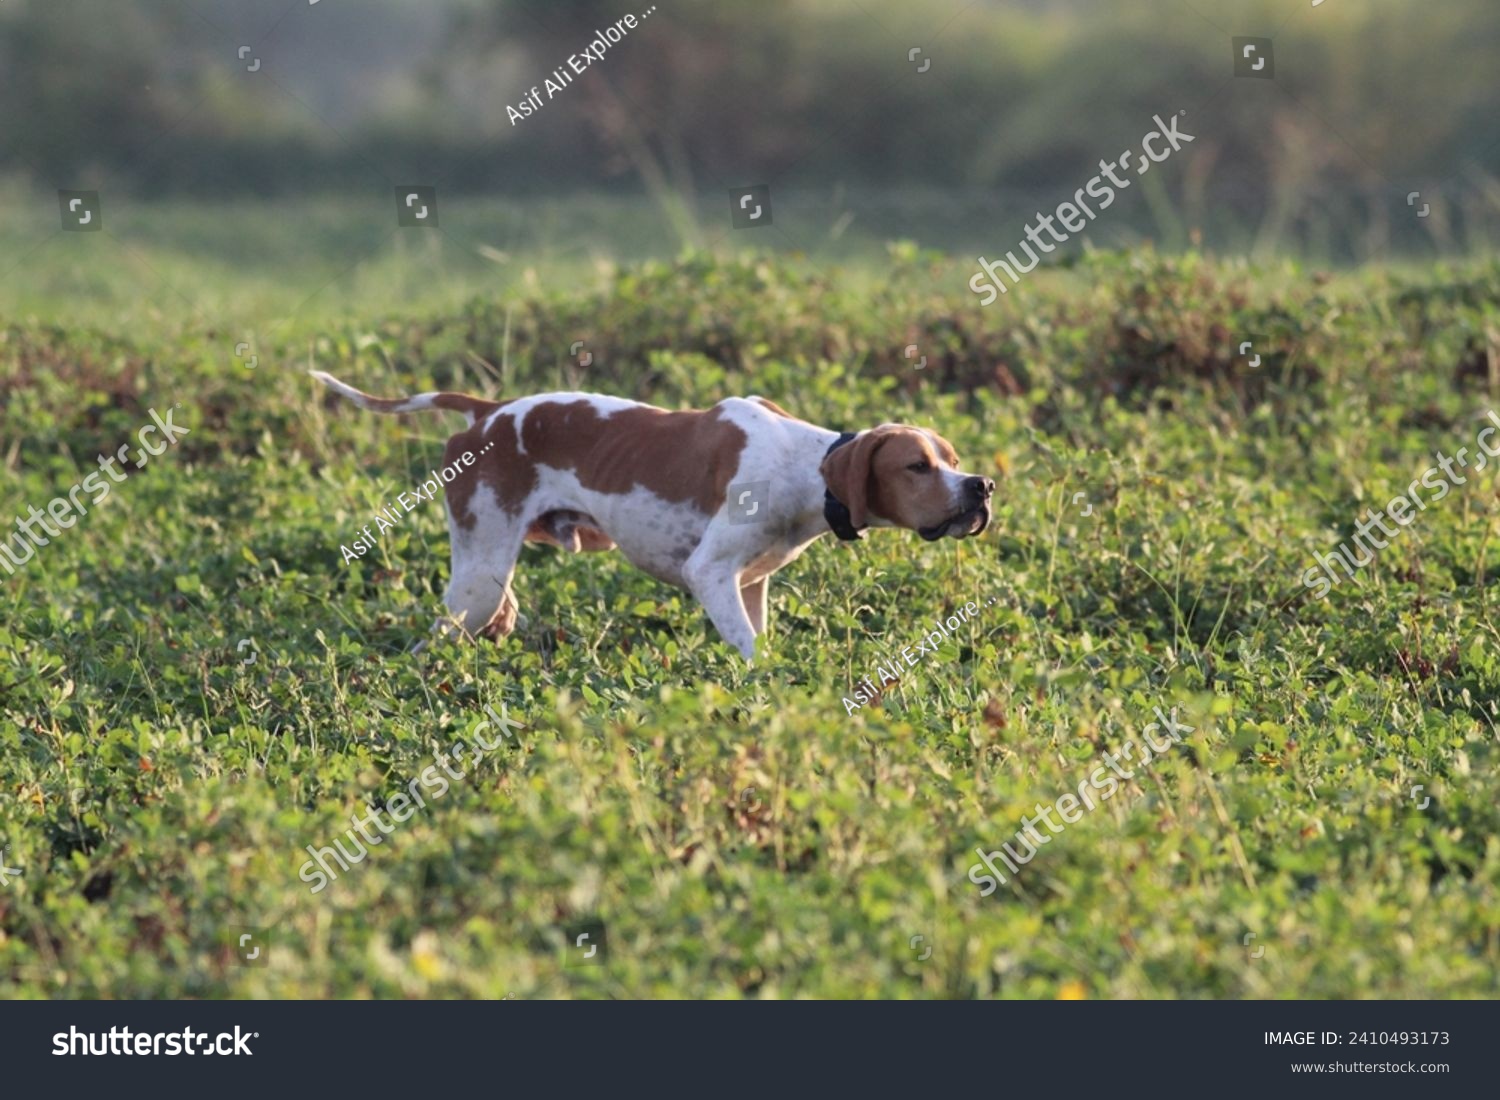 Pointer dog hunting quail, Garman pointer, English Pointer, Francolin Hunting, Hunting with net and dog. #2410493173